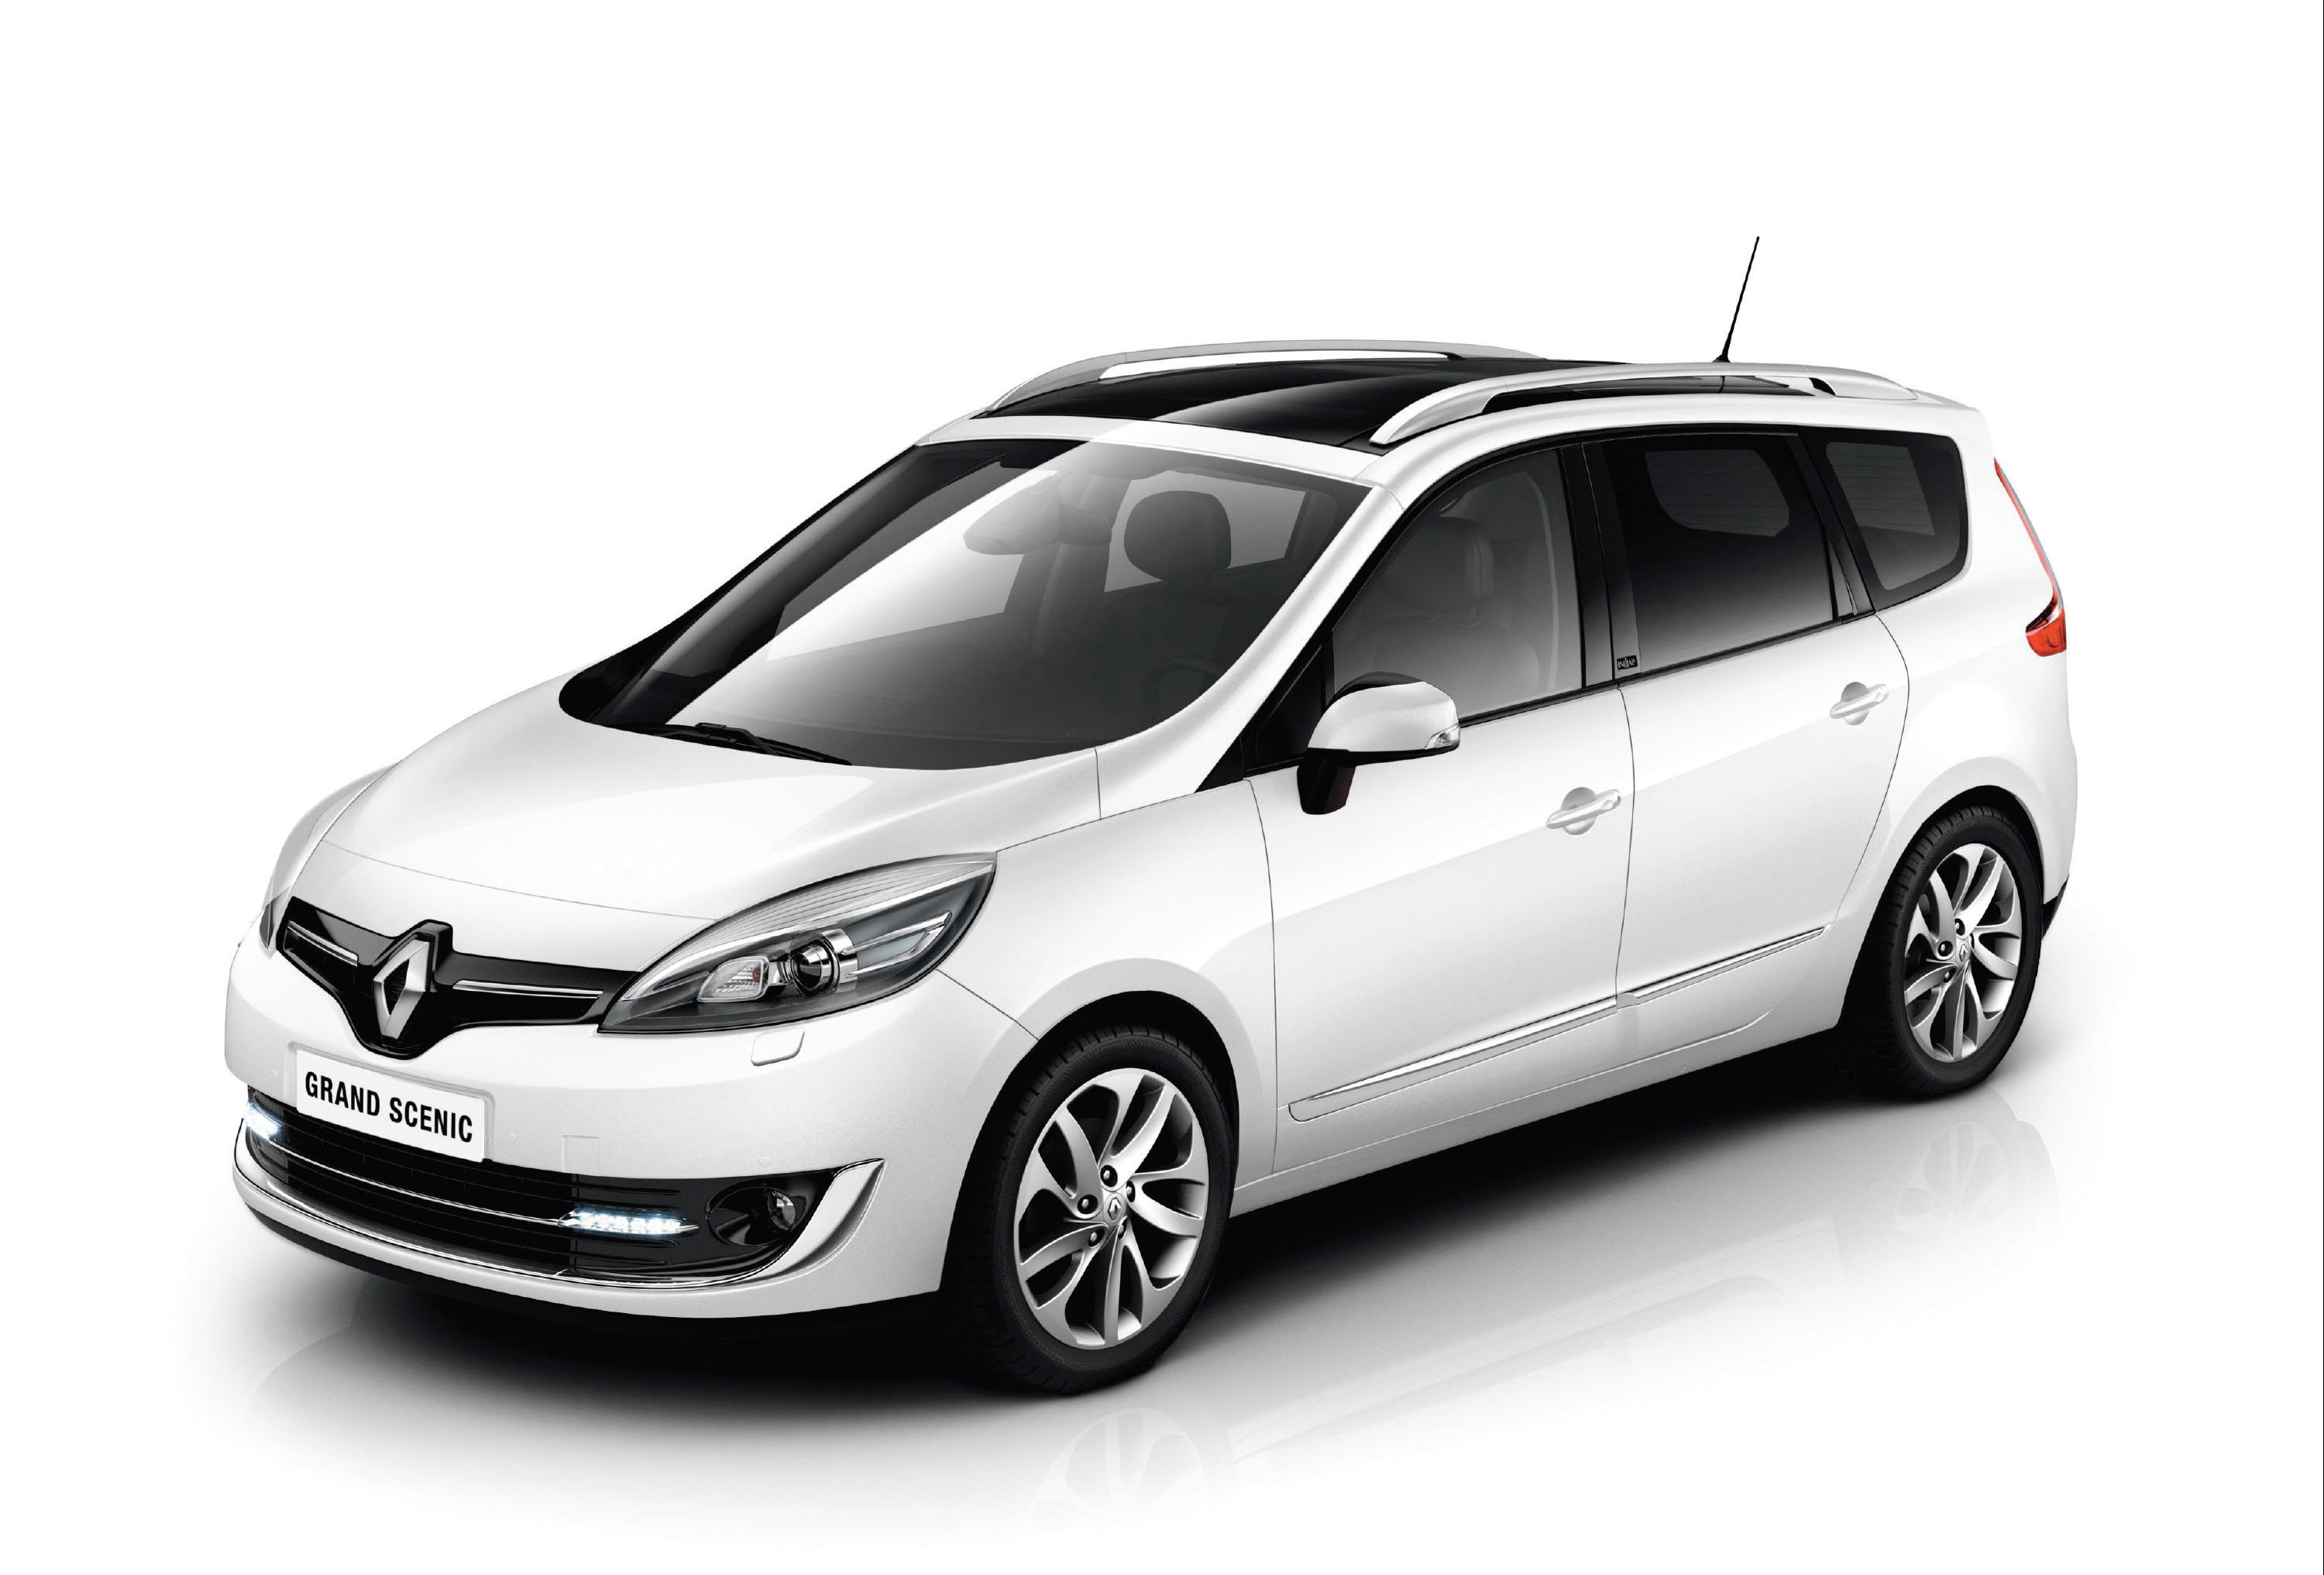 2013 Renault Scenic XMOD UK Price £17,955